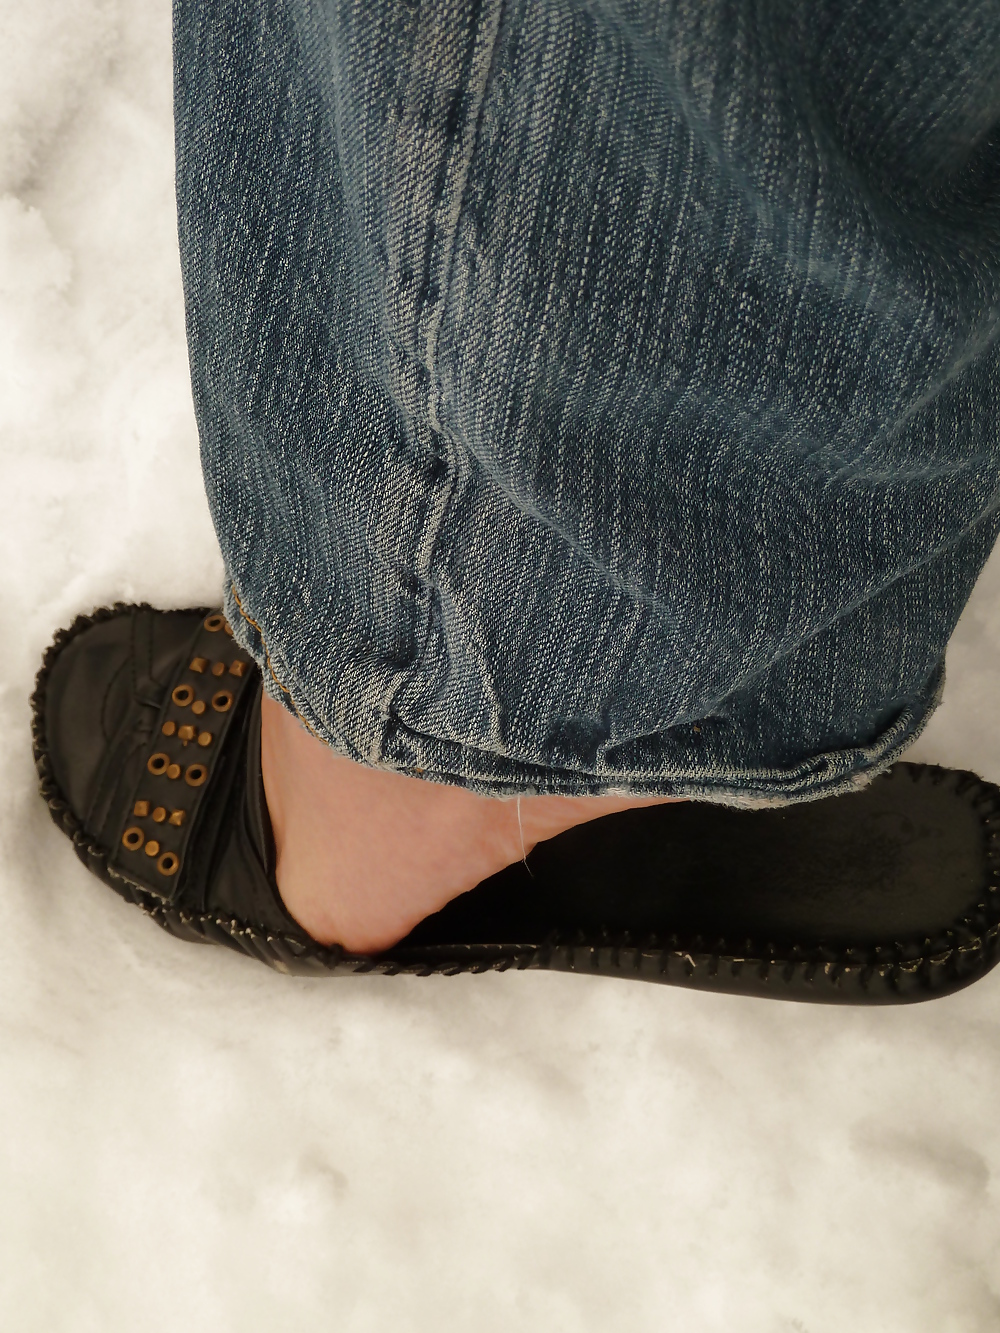 Feet in snow #8299016